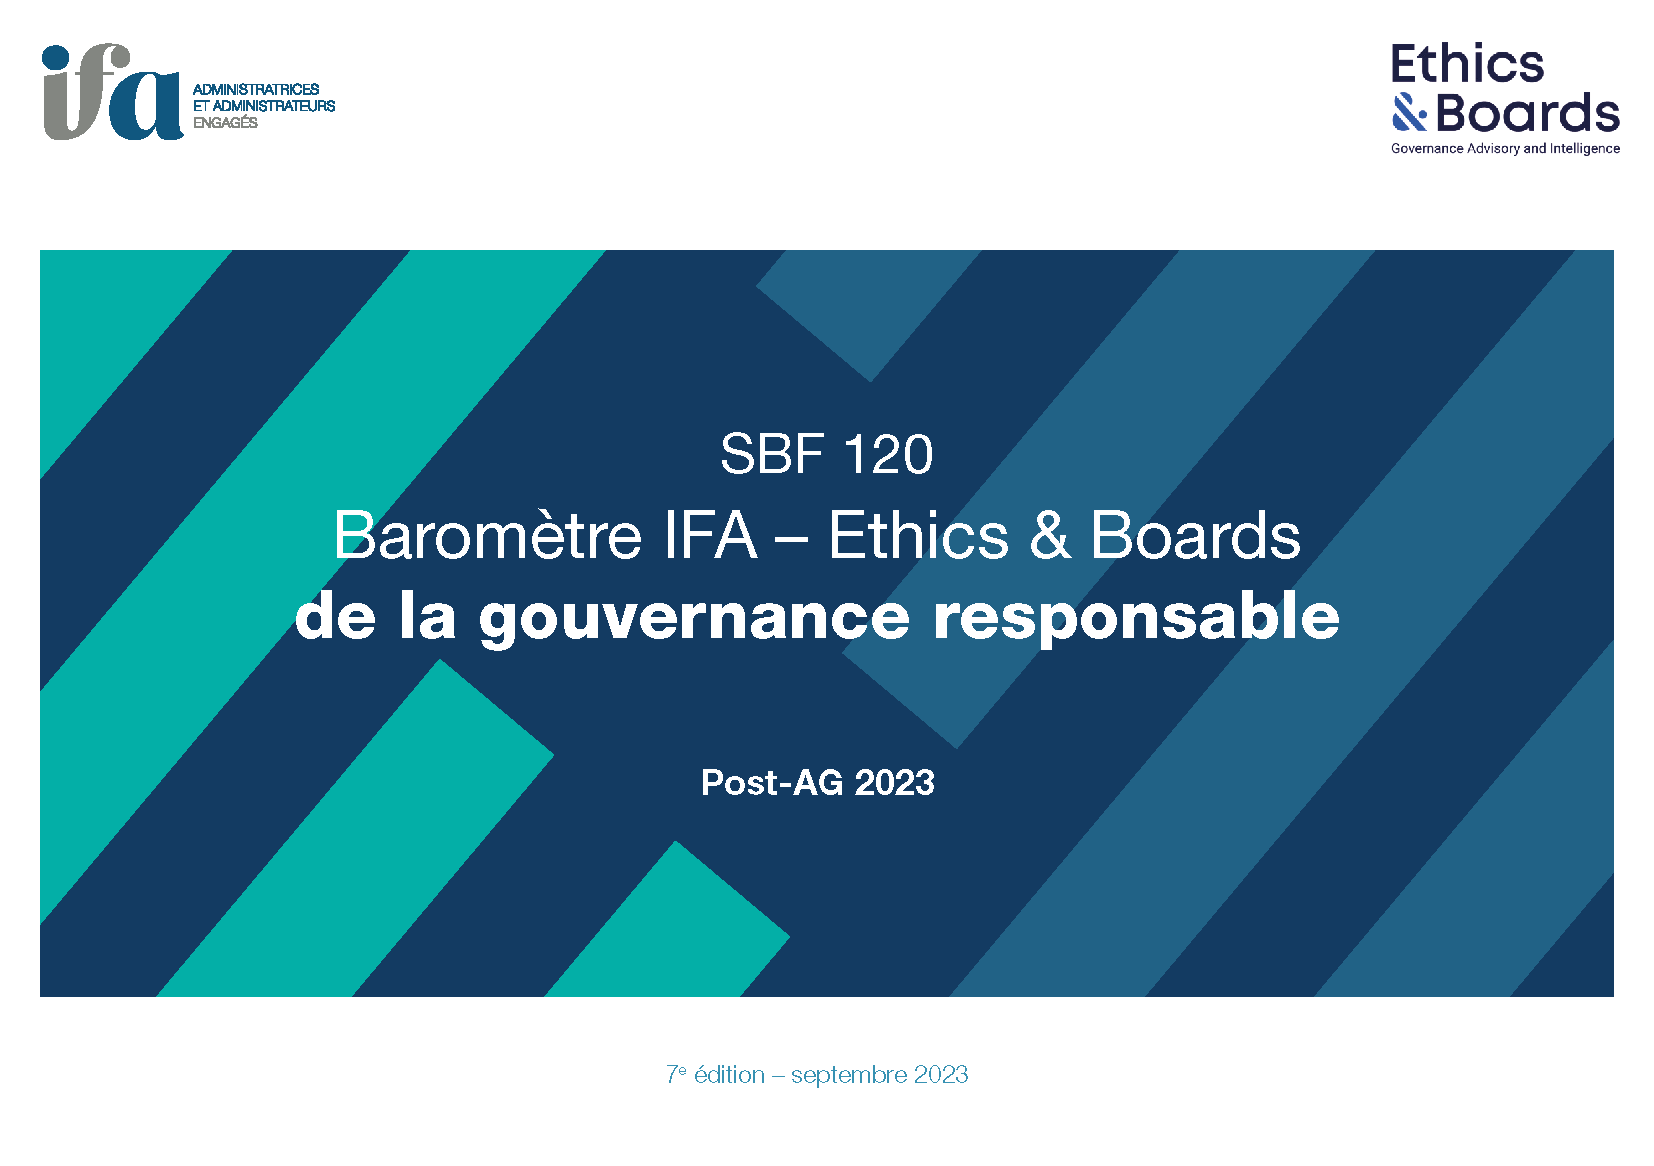 Baromètre IFA-Ethics & Board du SBF 120 - Post-AG 2023